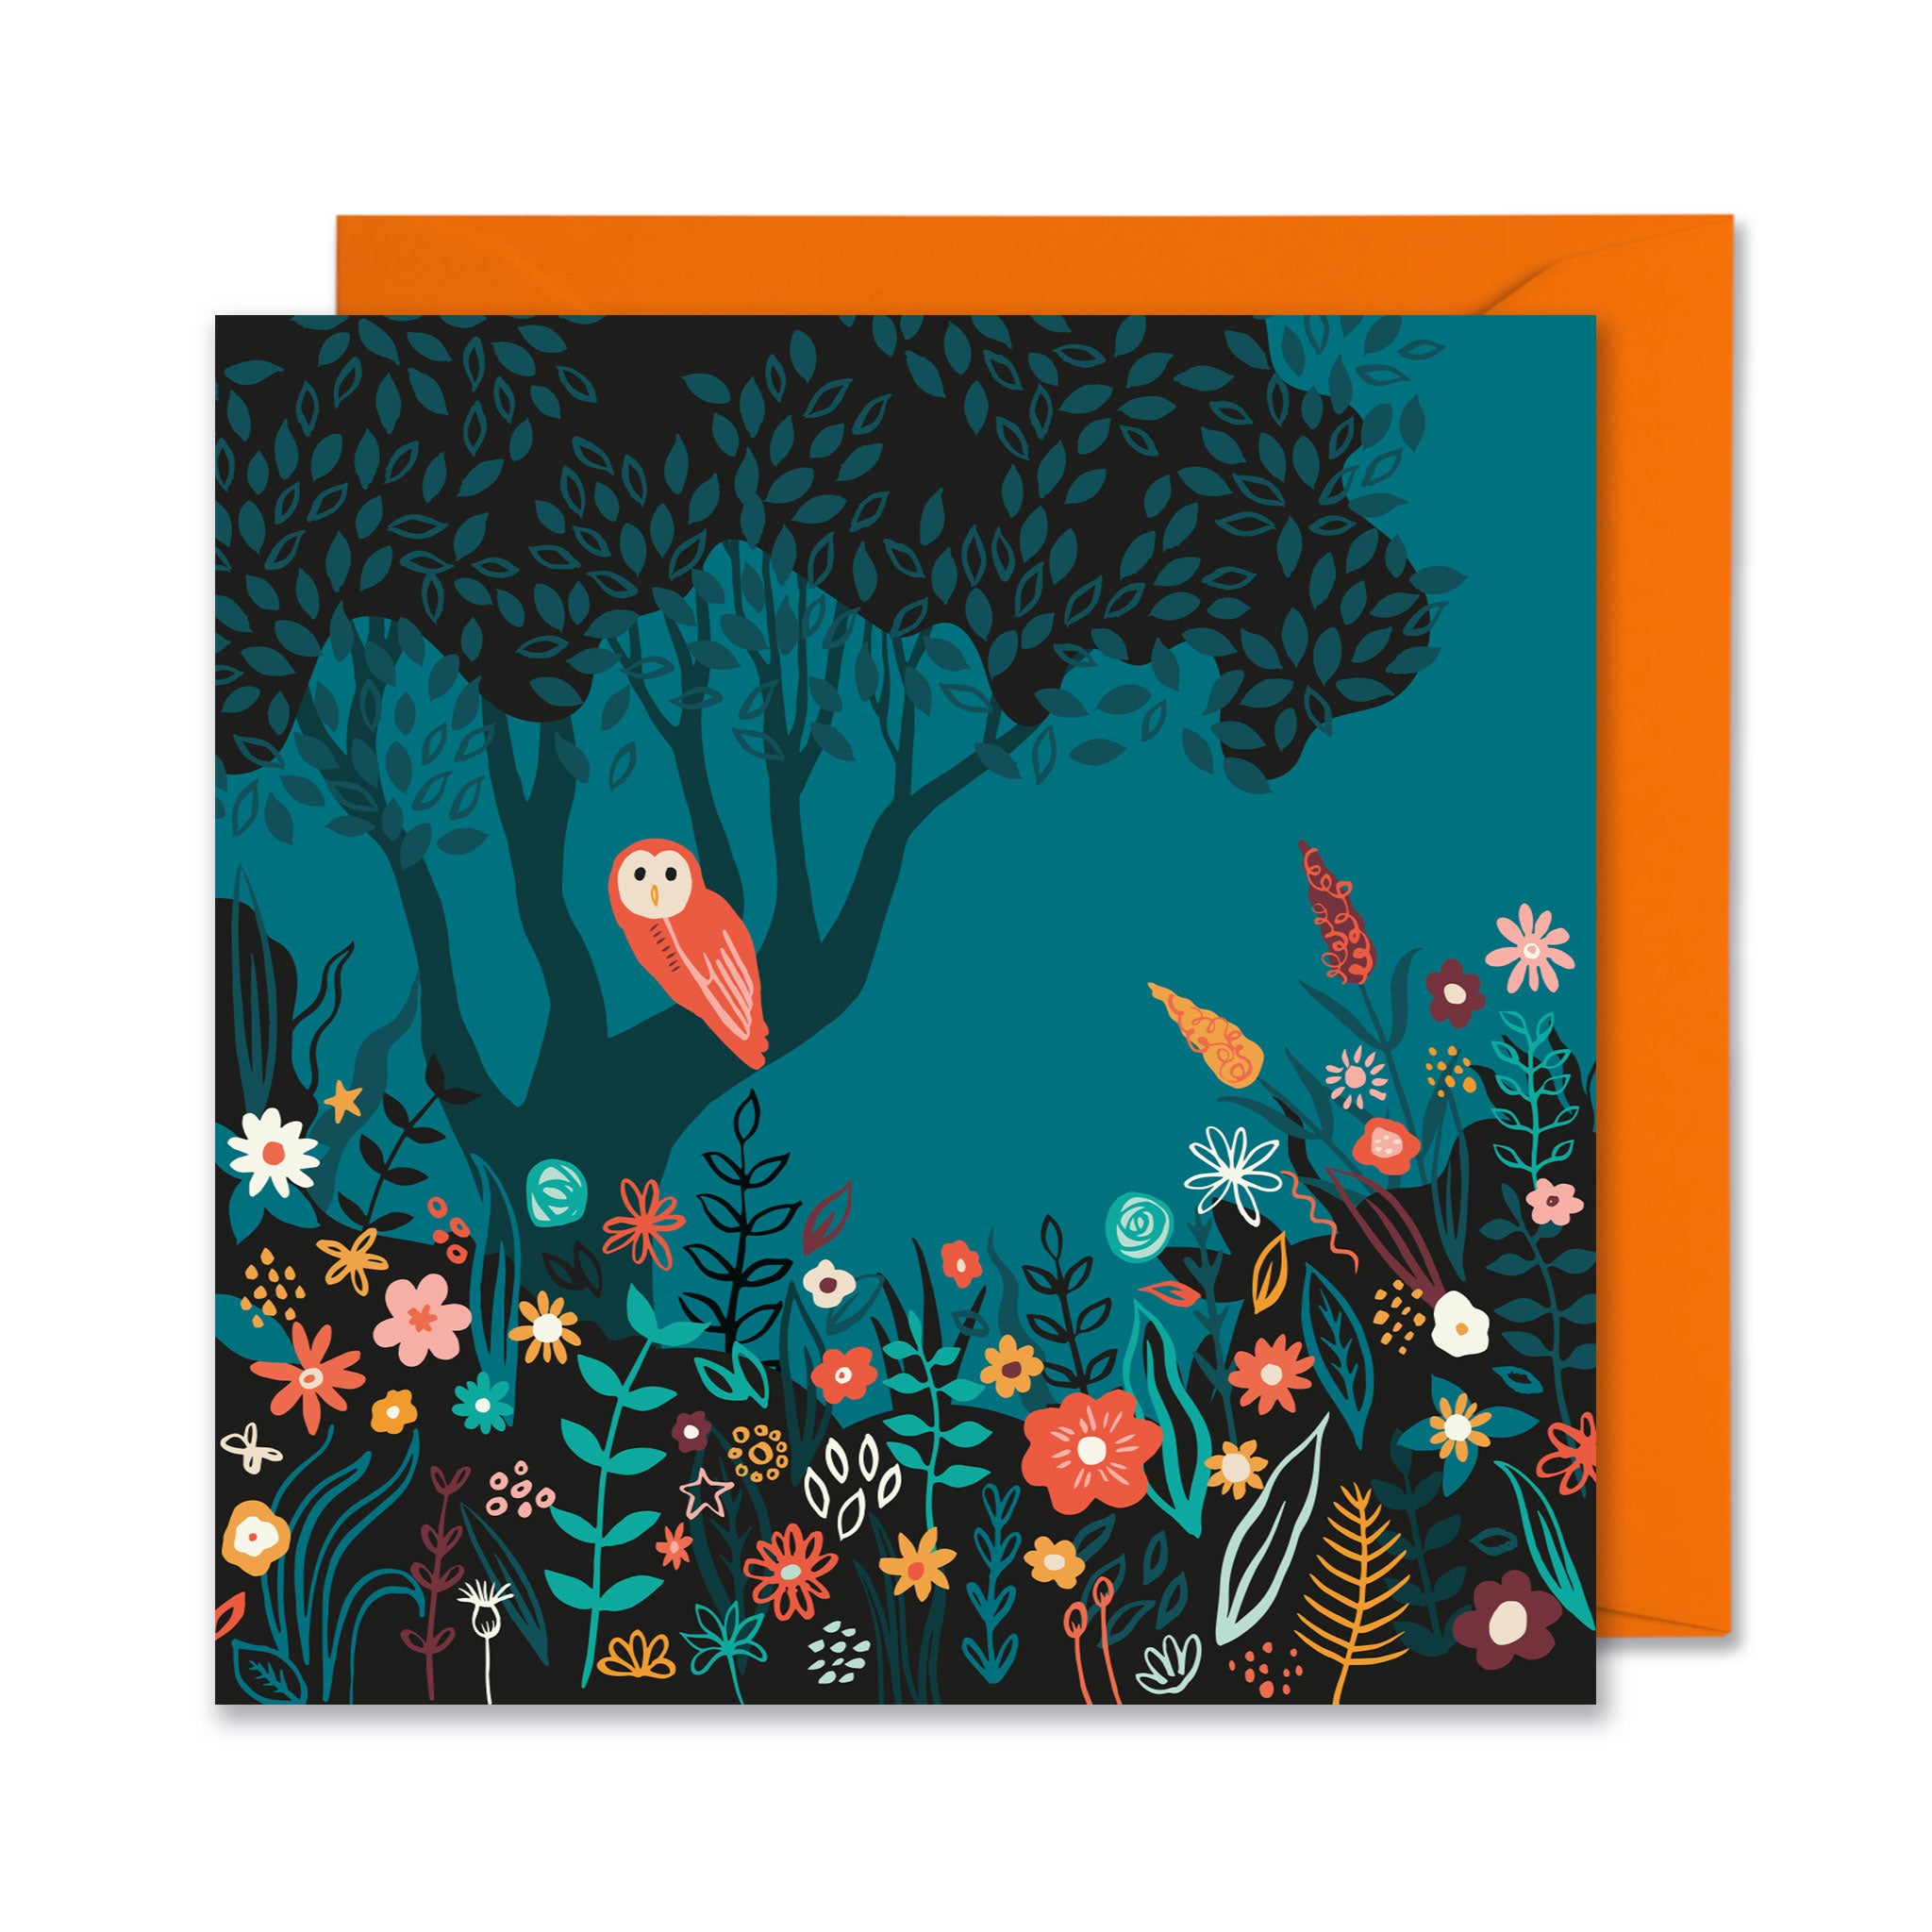 Owl Midnight Garden Greetings Card